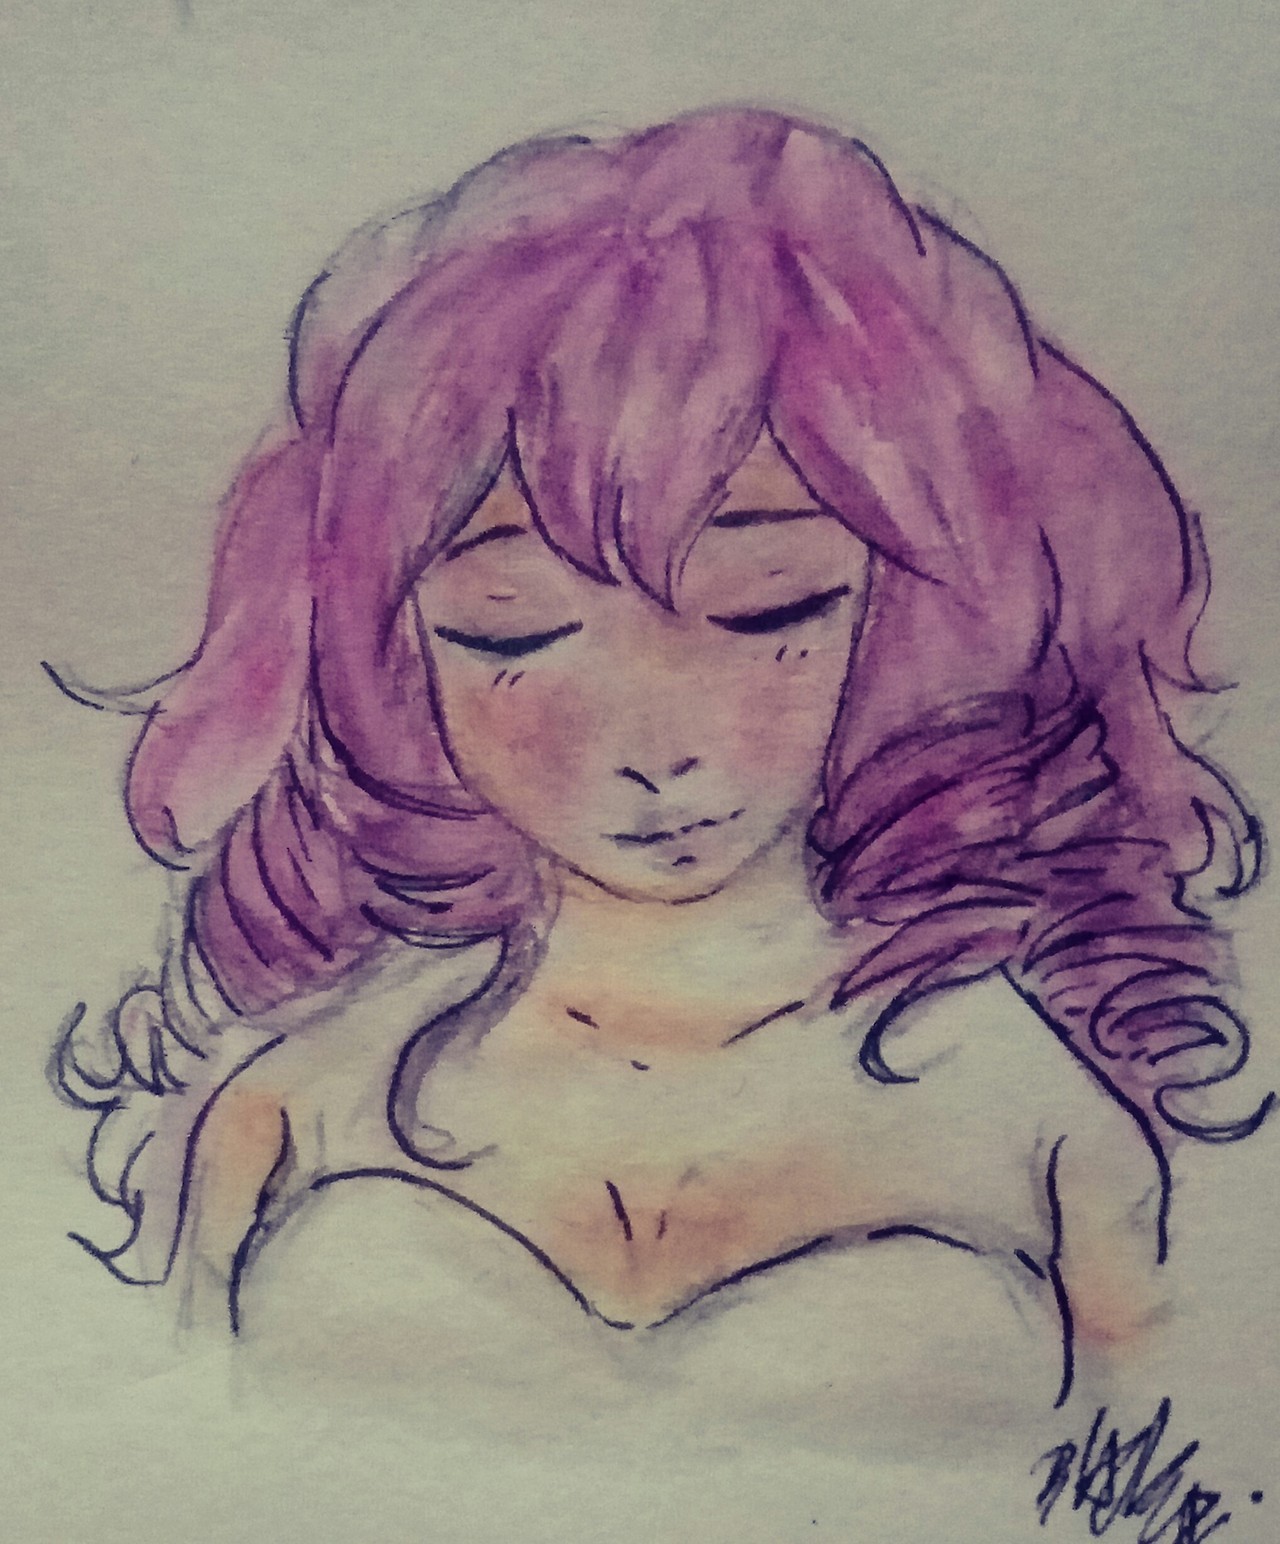 i kinda felt like drawing rose because i think she’s really pretty